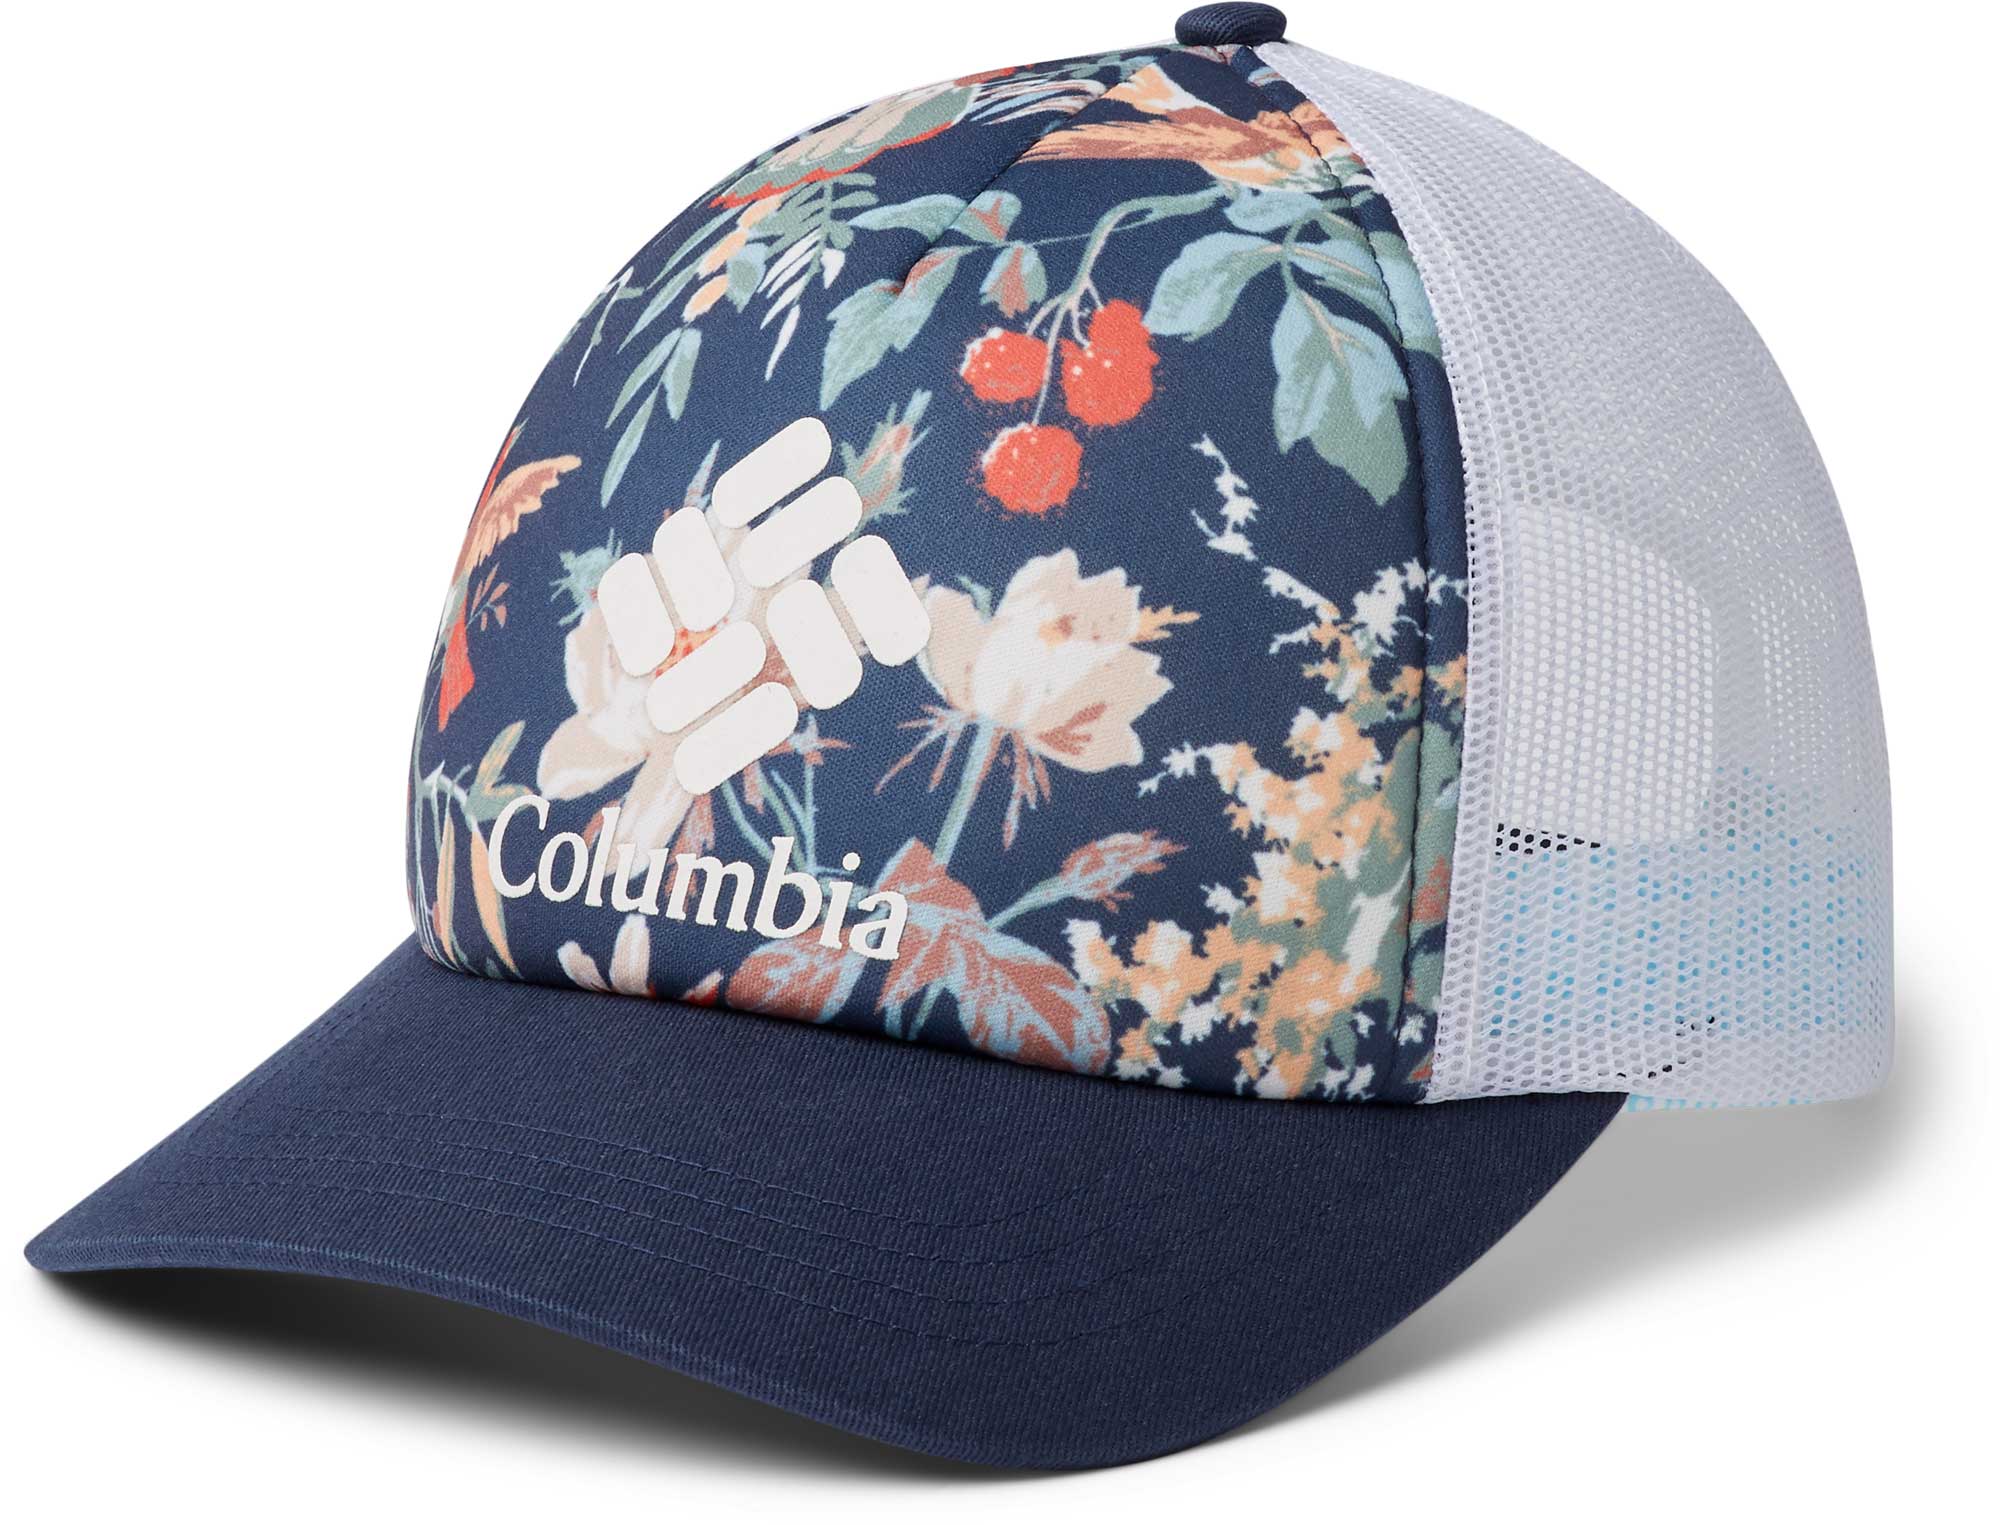 Women's baseball cap